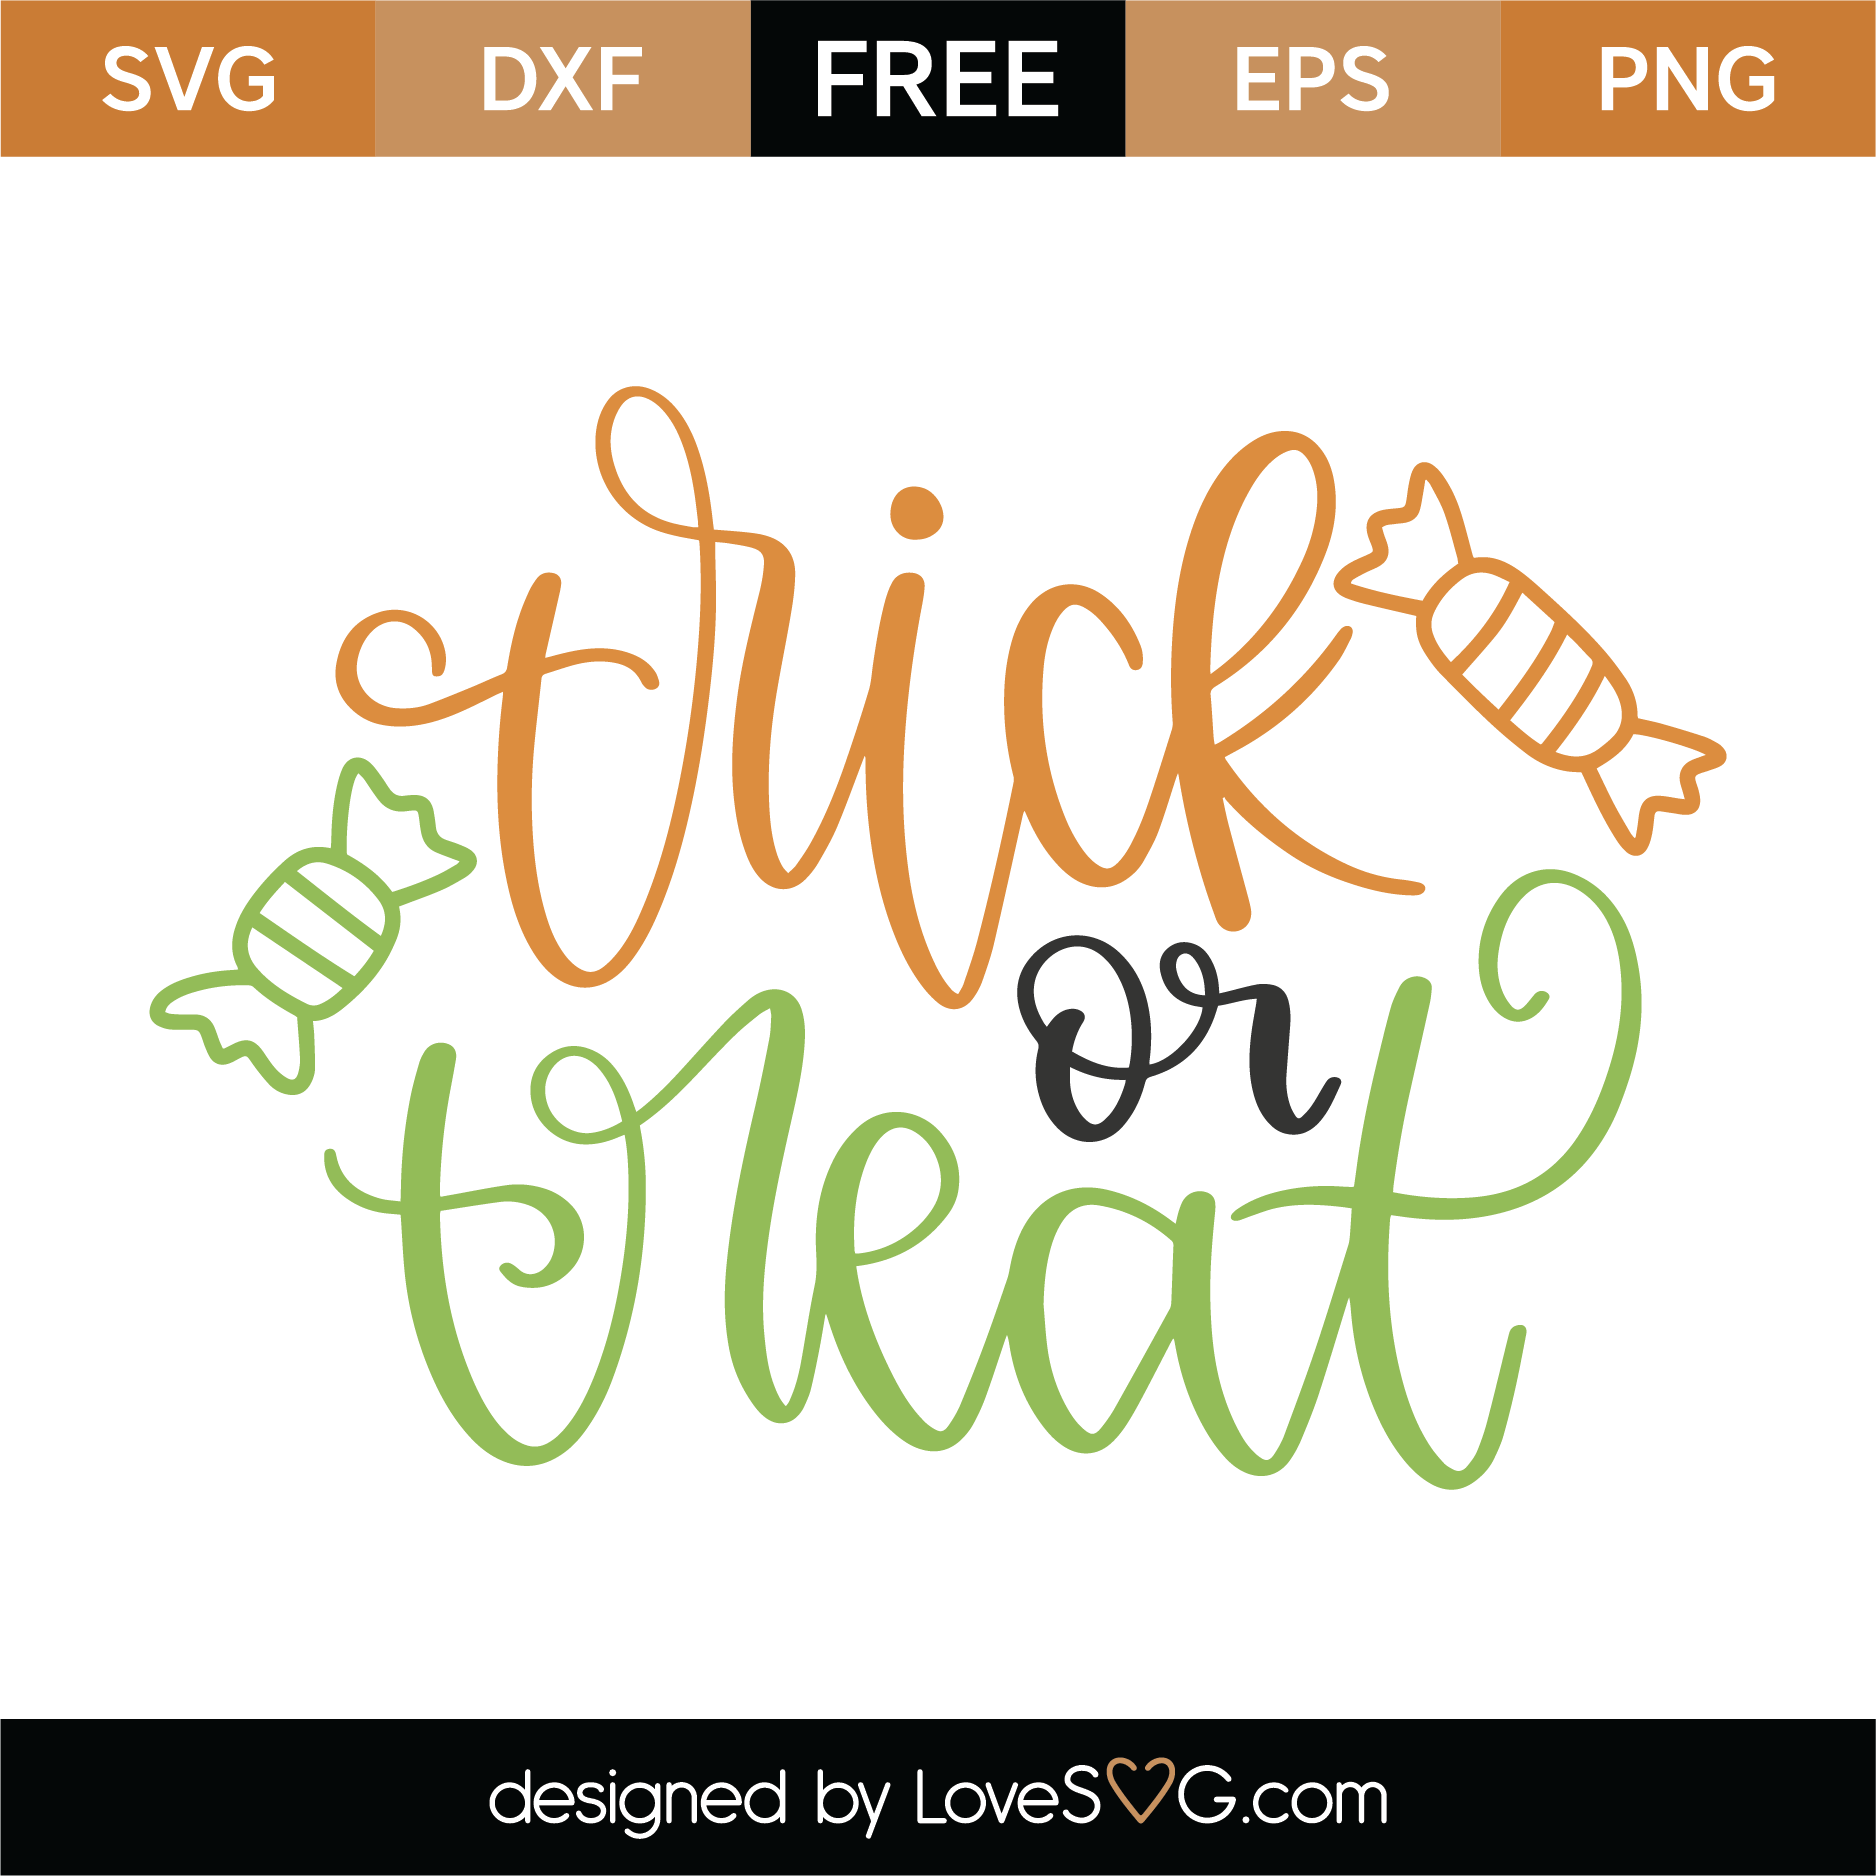 Download Free Trick Or Treat SVG Cut File | Lovesvg.com